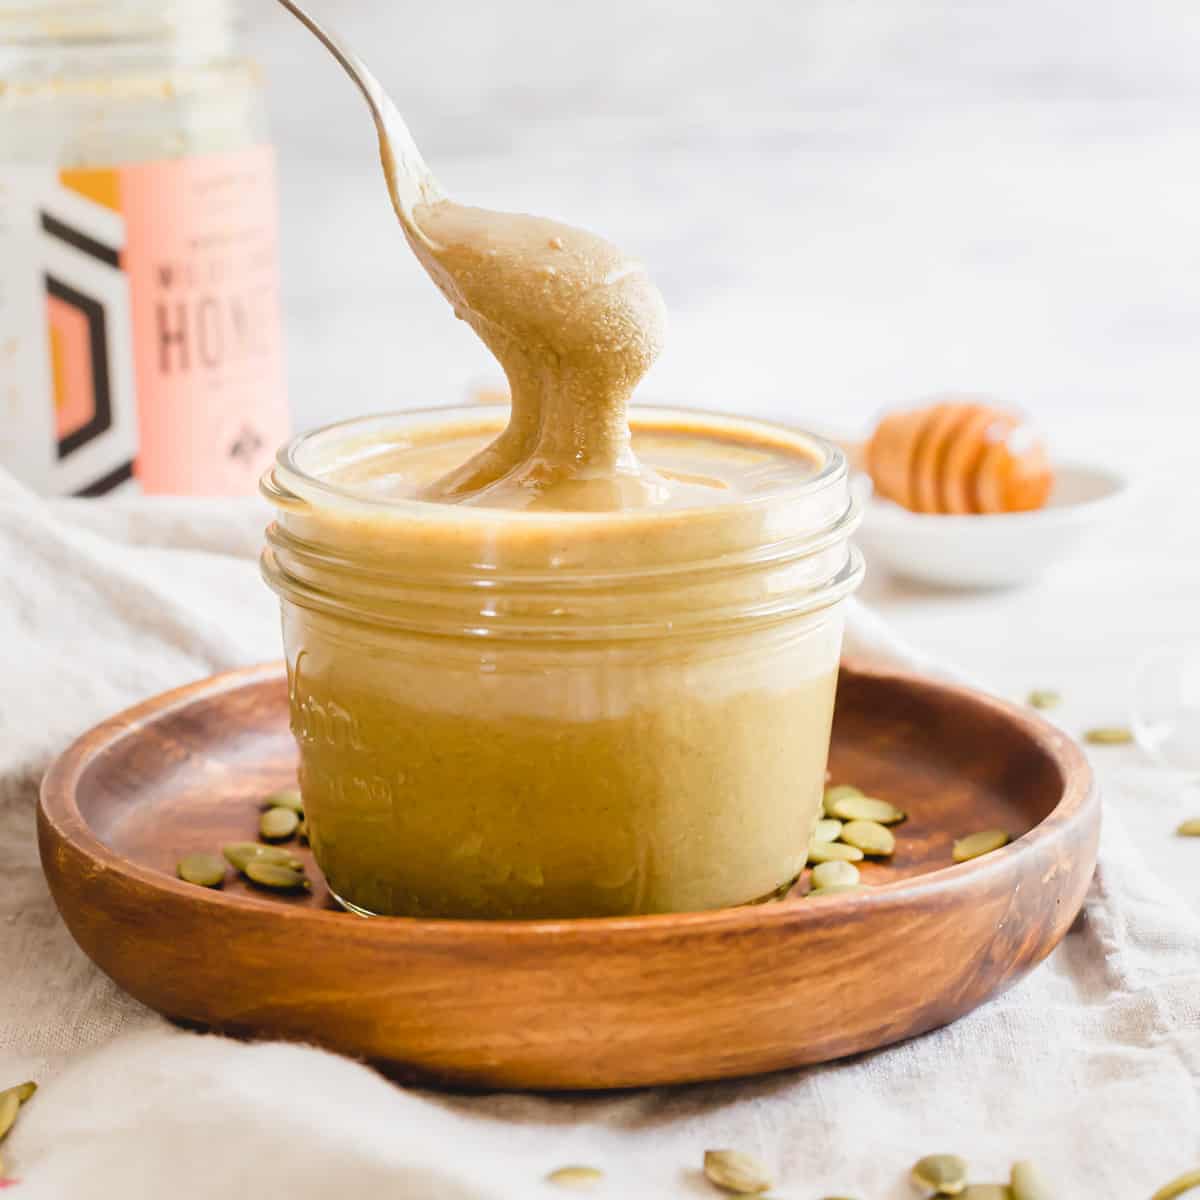 Creamy pumpkin seed nut butter recipe in a jar with a spoon.